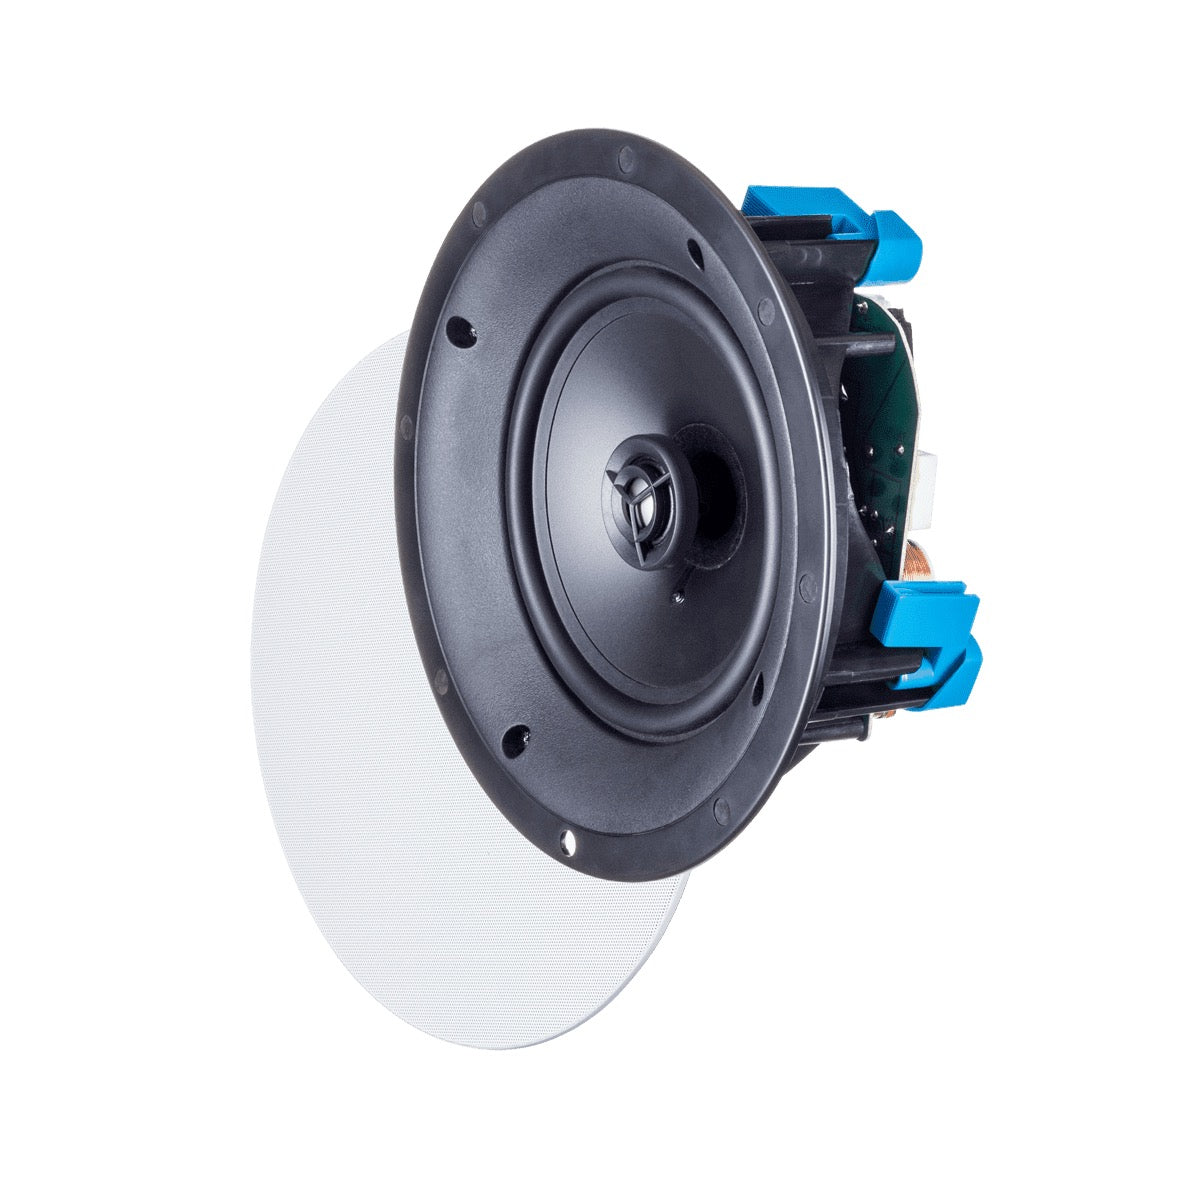 Paradigm CI Home H65-R - In-Ceiling Speaker - Pair - AVStore